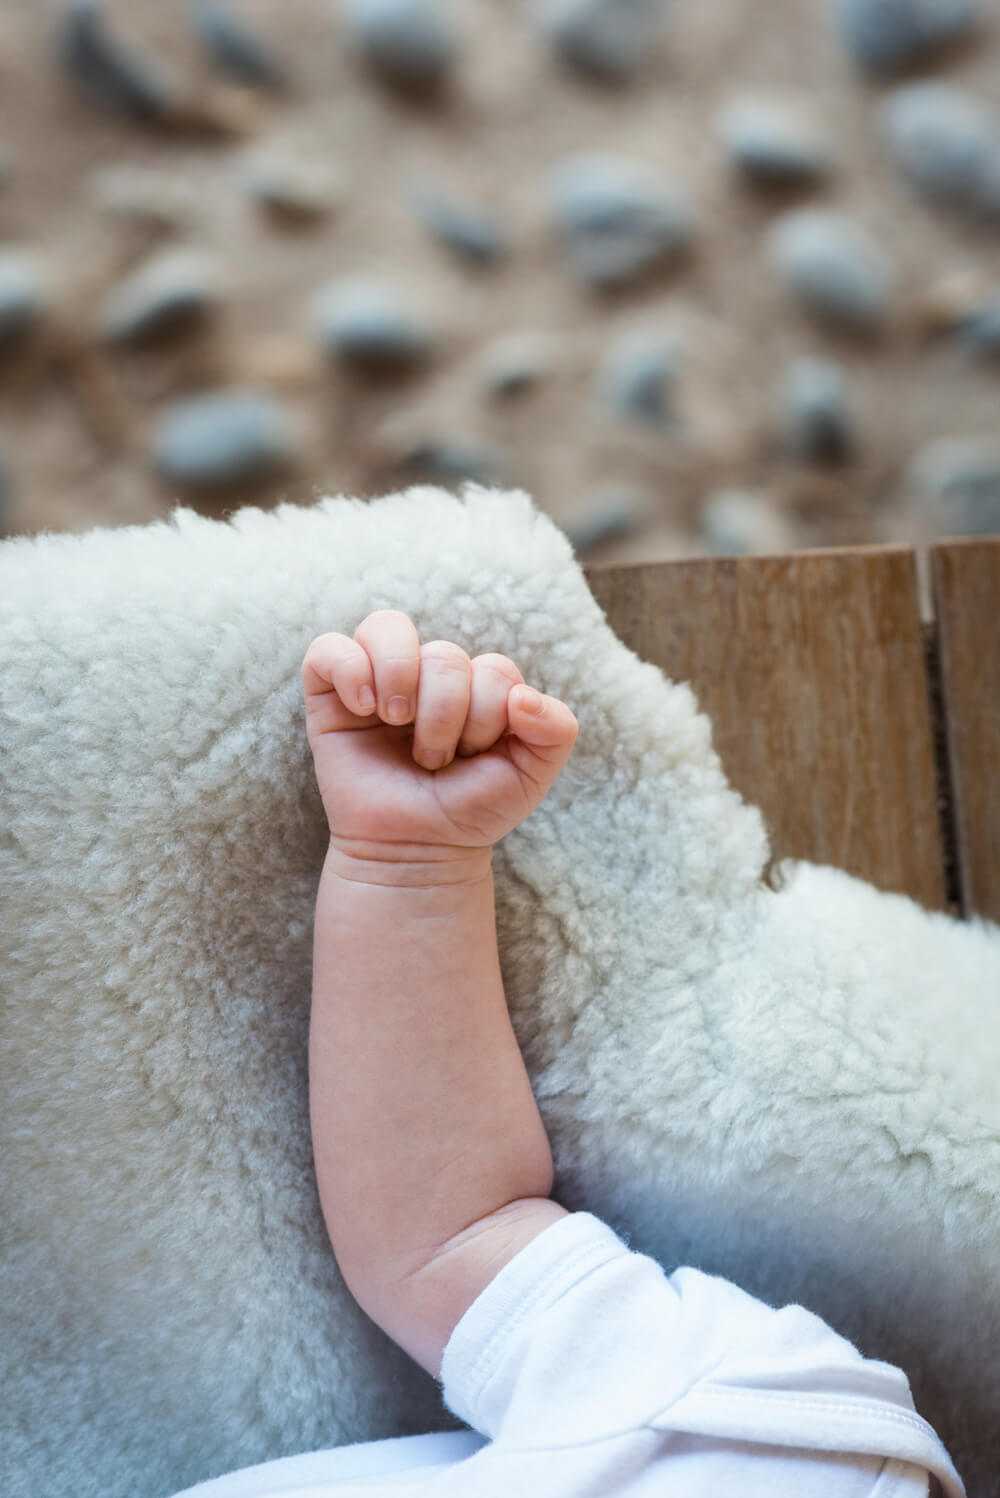 a closed fist of a newborn baby